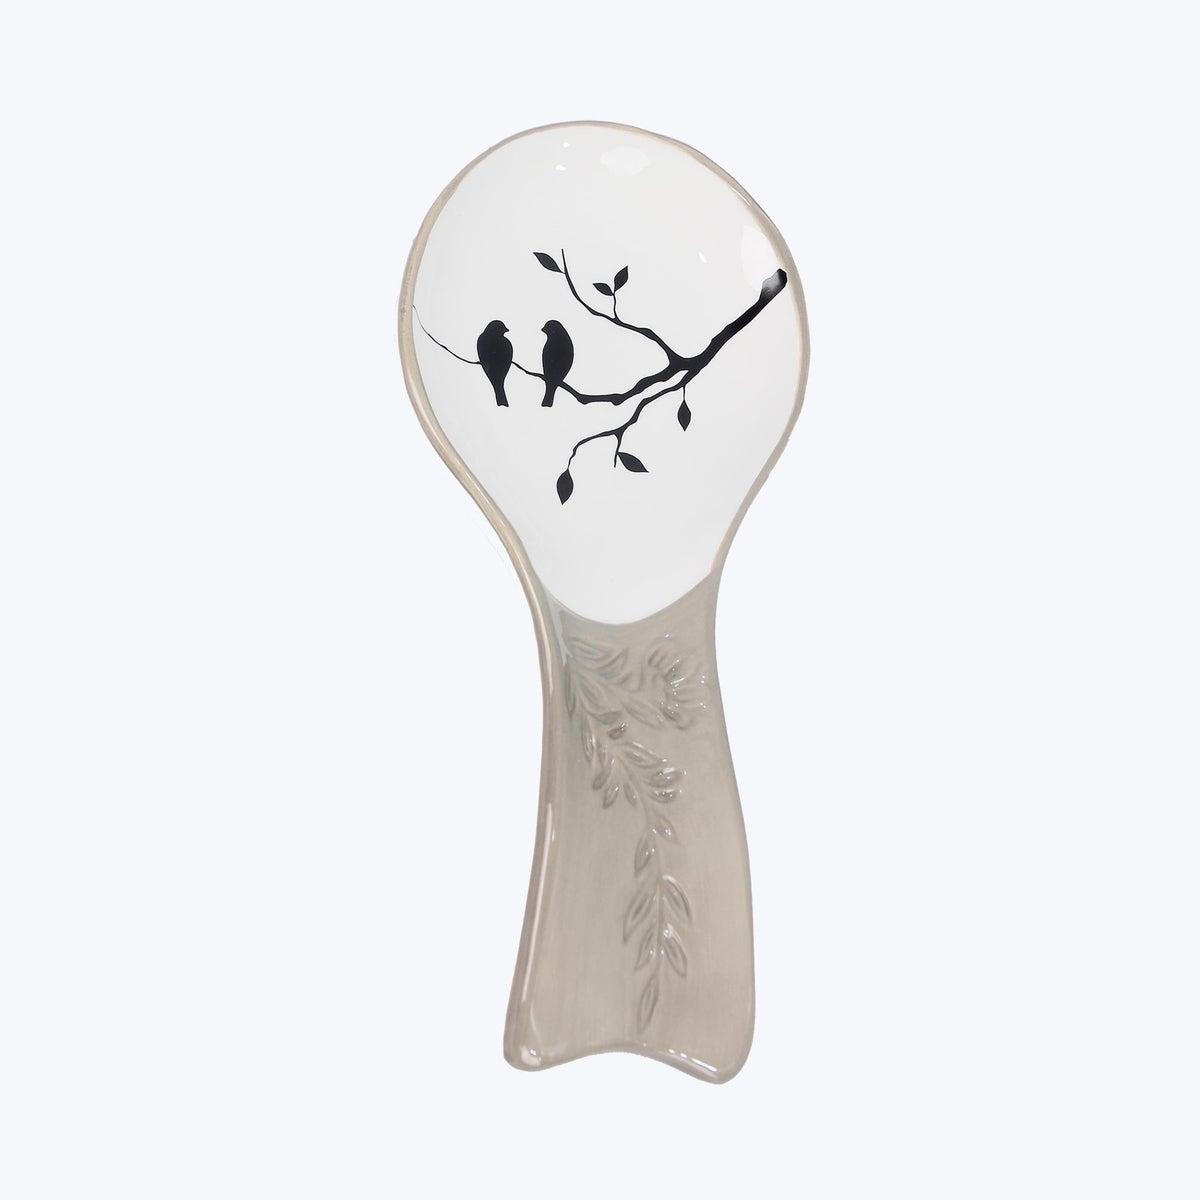 Ceramic Gray and White Botanical/Bird Design Spoon Rest